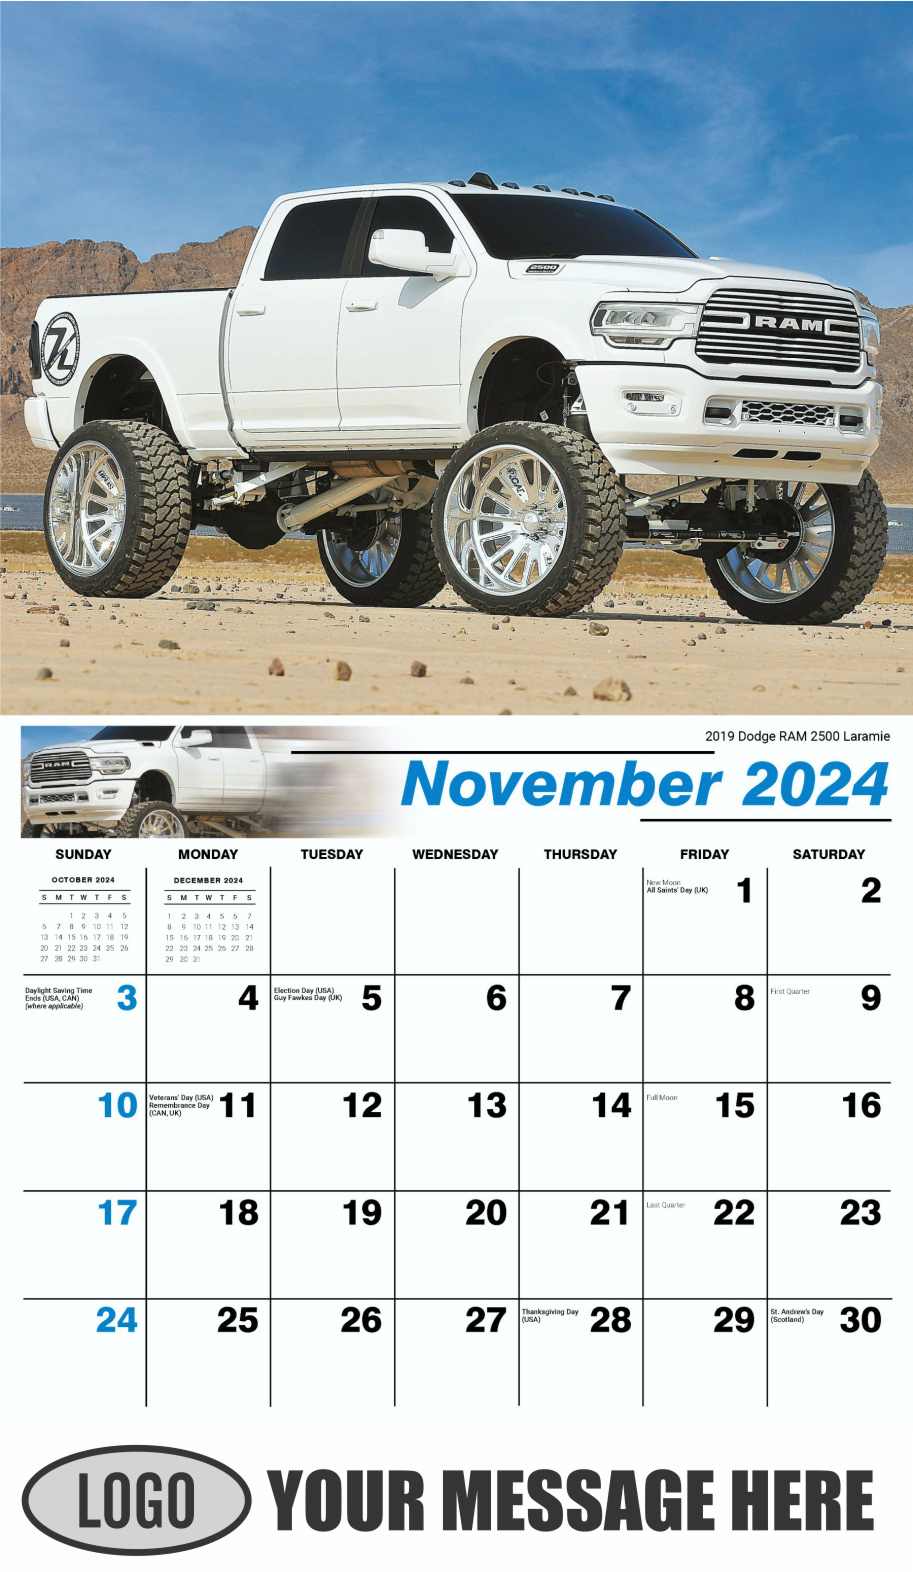 Pumped-Up Pickups 2024 Automotive Business Promo Calendar - November